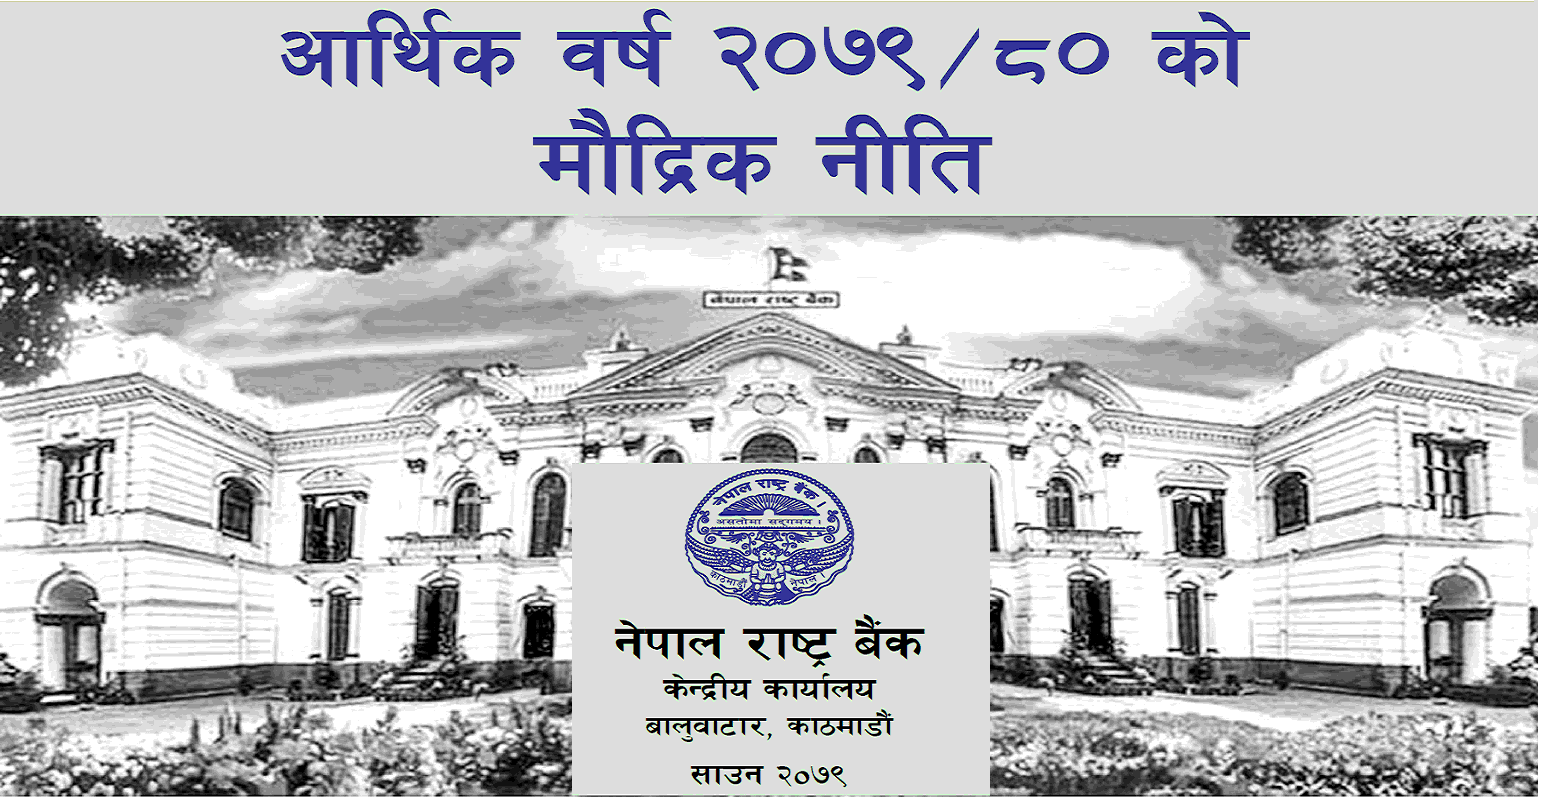 Monetary Policy of Nepal 2079-80